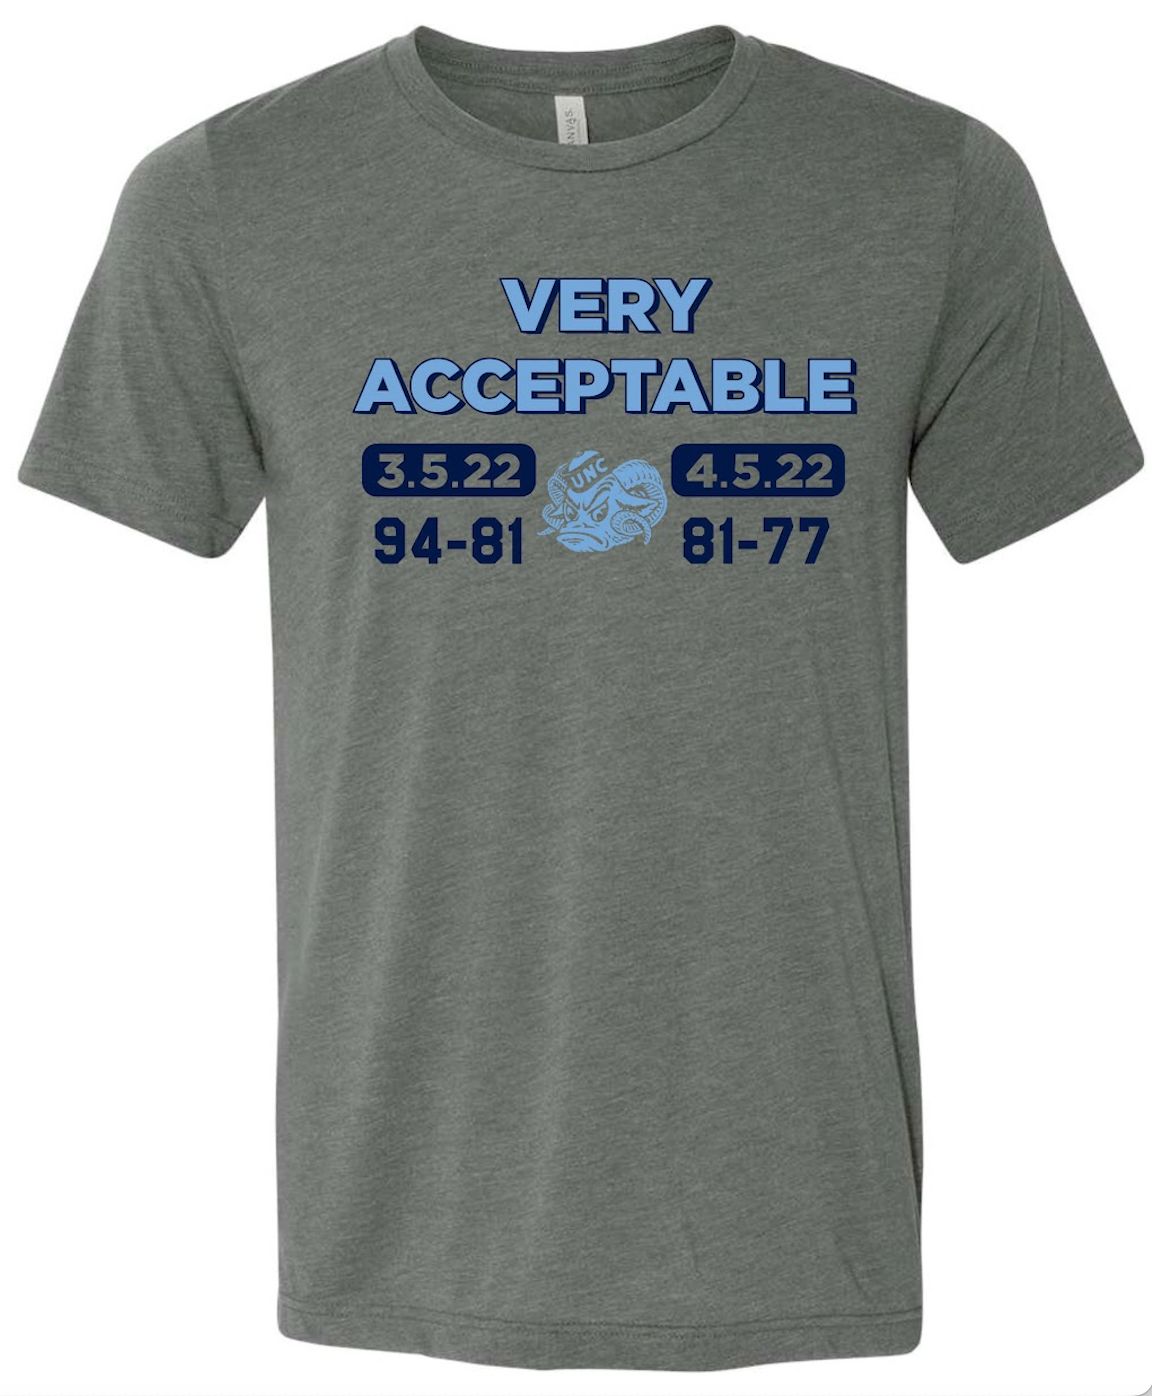 Very Acceptable UNC vs Duke 2022 Score T-shirt